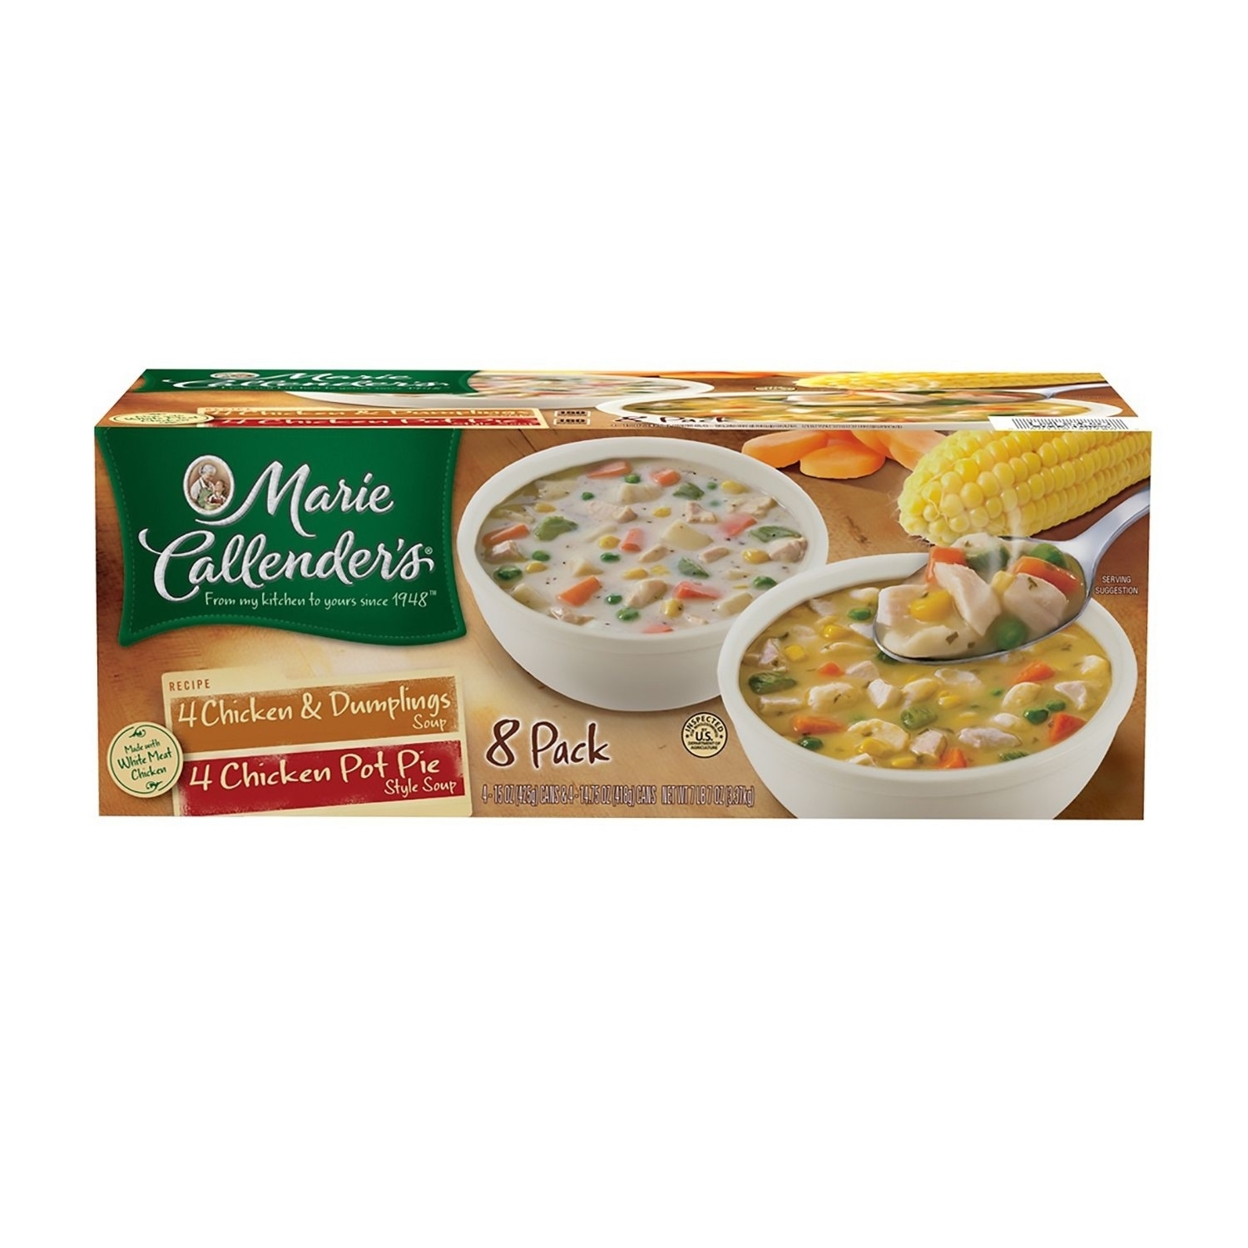 Marie Callender Chicken Variety Soup, 8 Pack